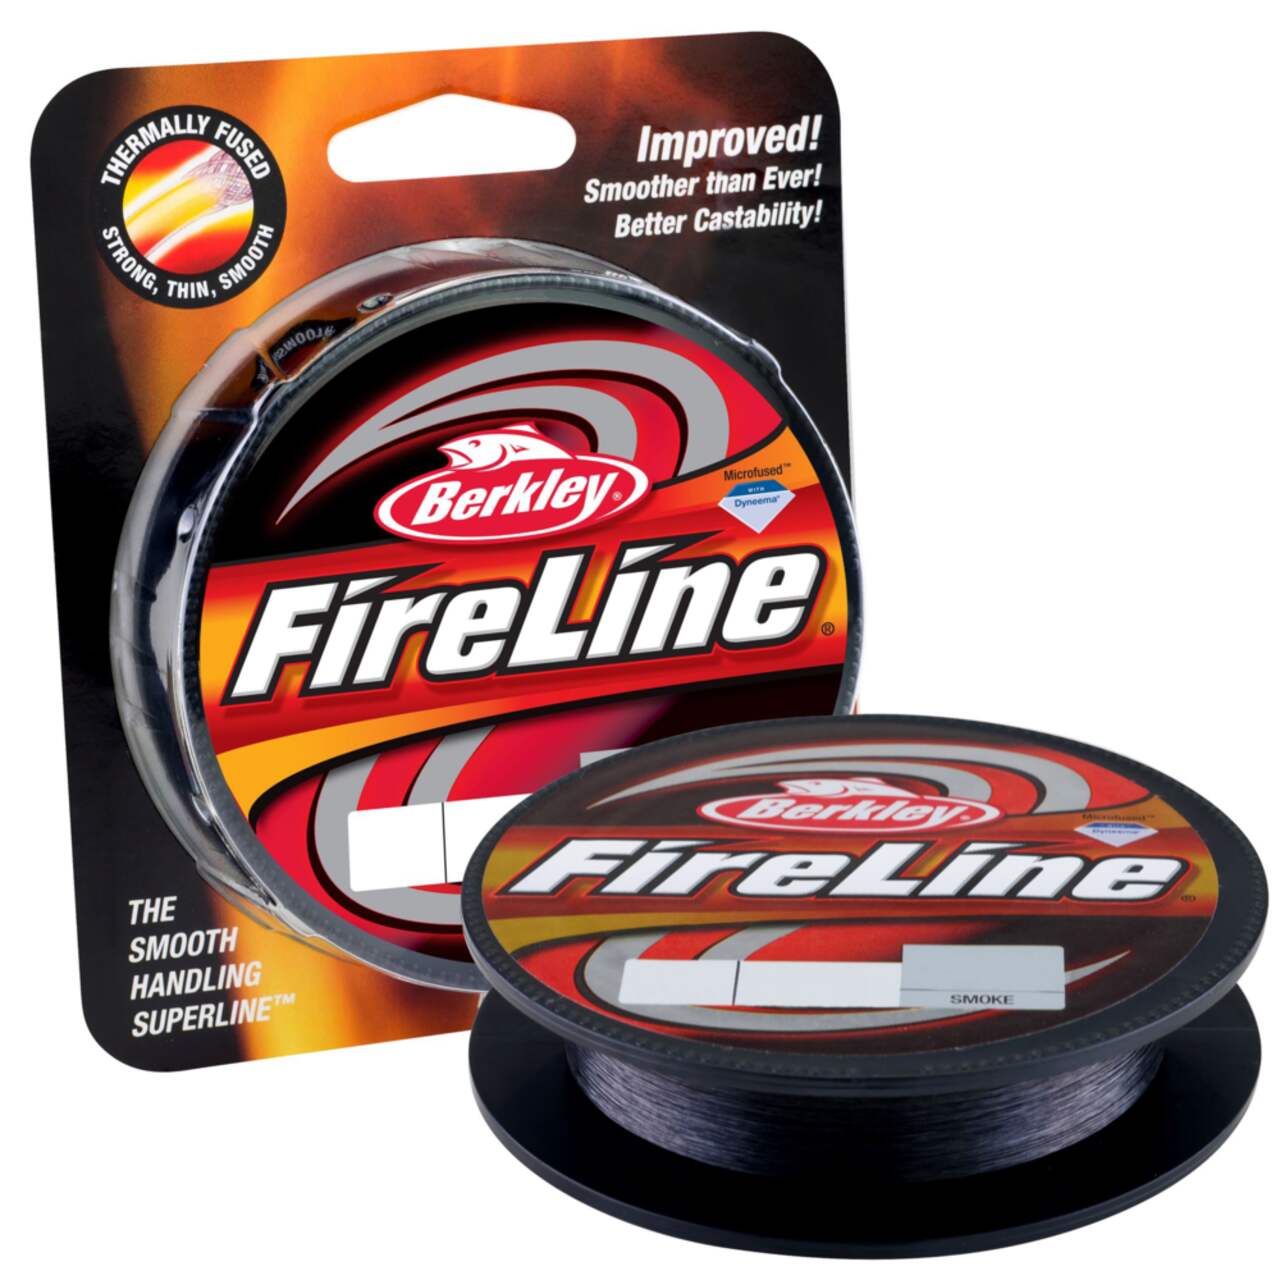 Fireline 6lb Smoke, 50 Yard Spool, Microfused Braided Bead Thread -   Canada